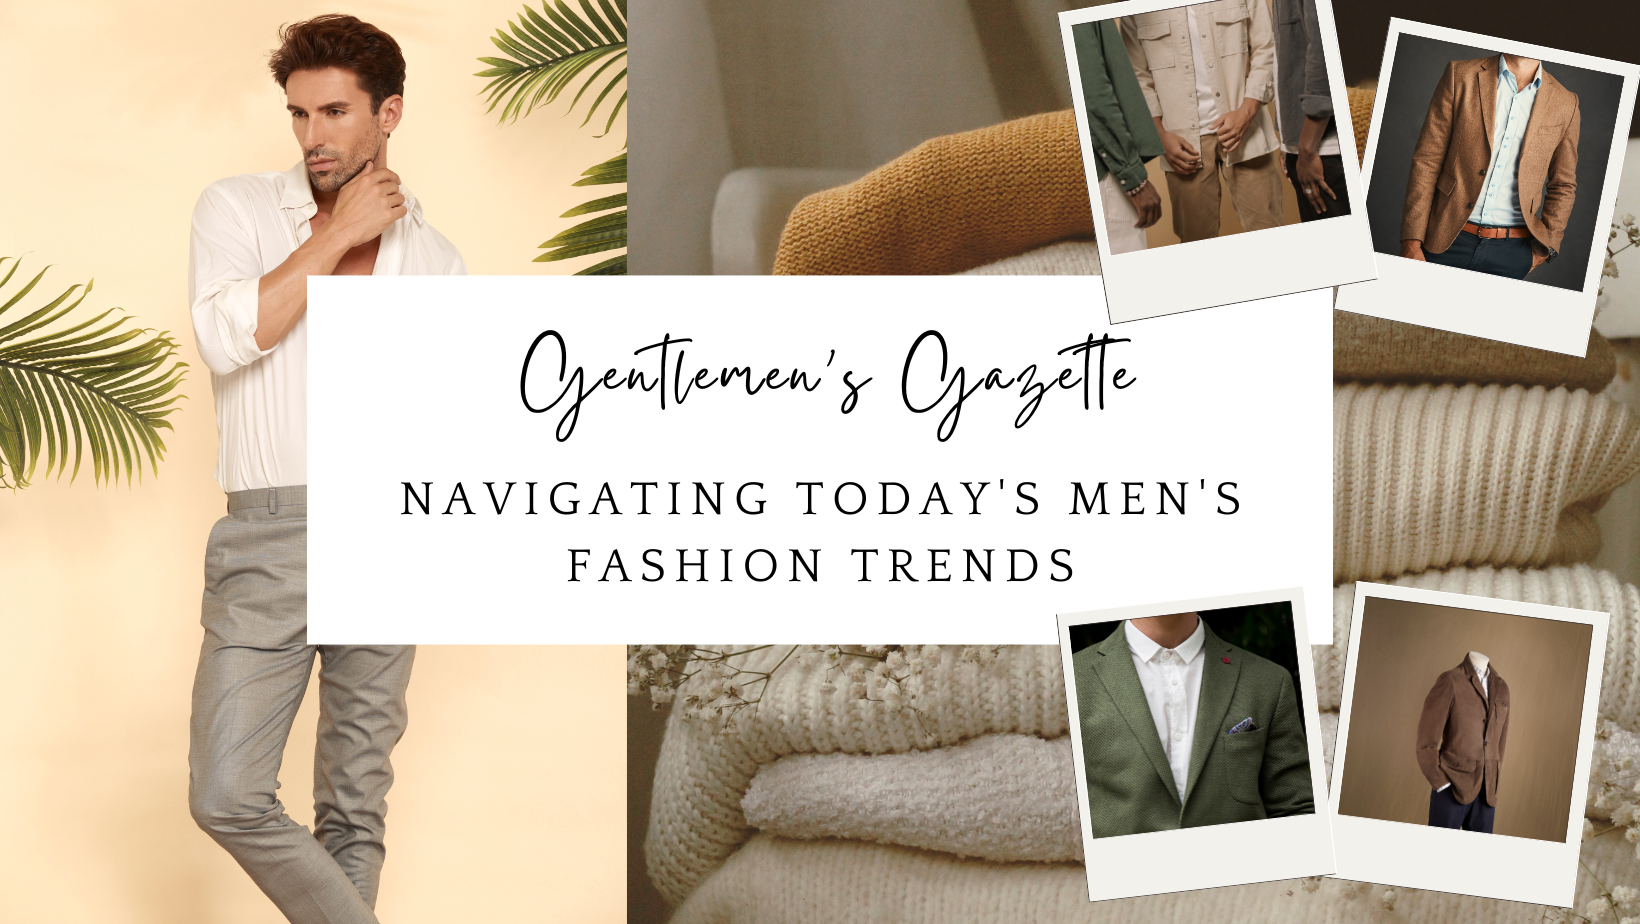 Gentlemen's Gazette: Navigating Today's Men's Fashion Trends